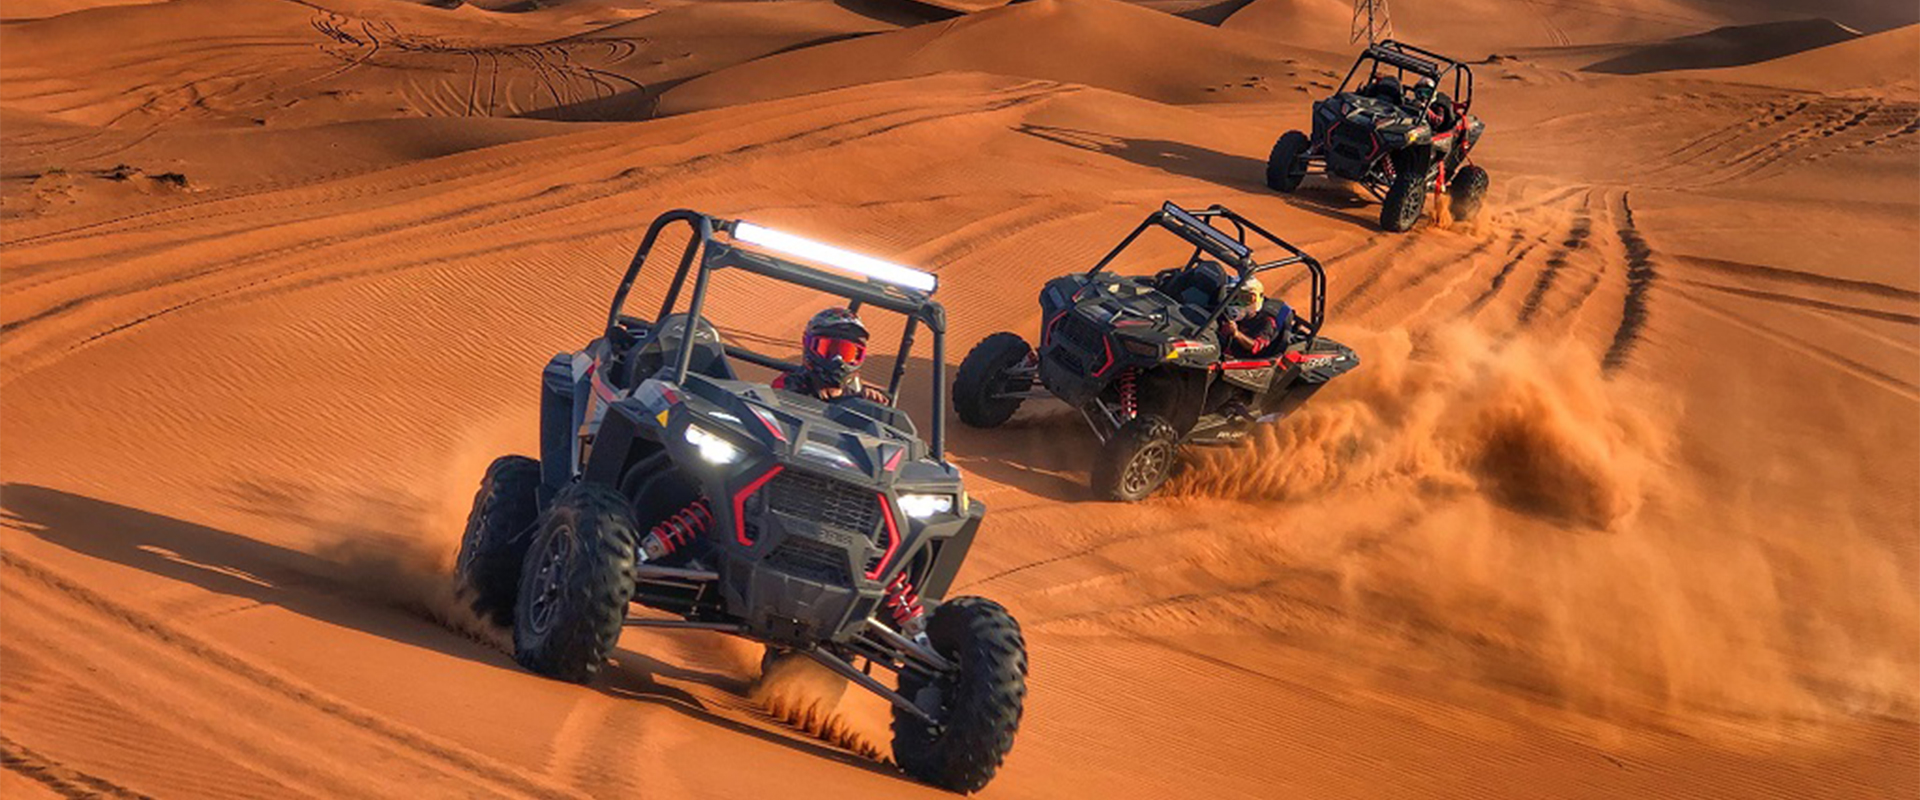 Dune Buggy Rental Dubai: Exploring the Desert in Style